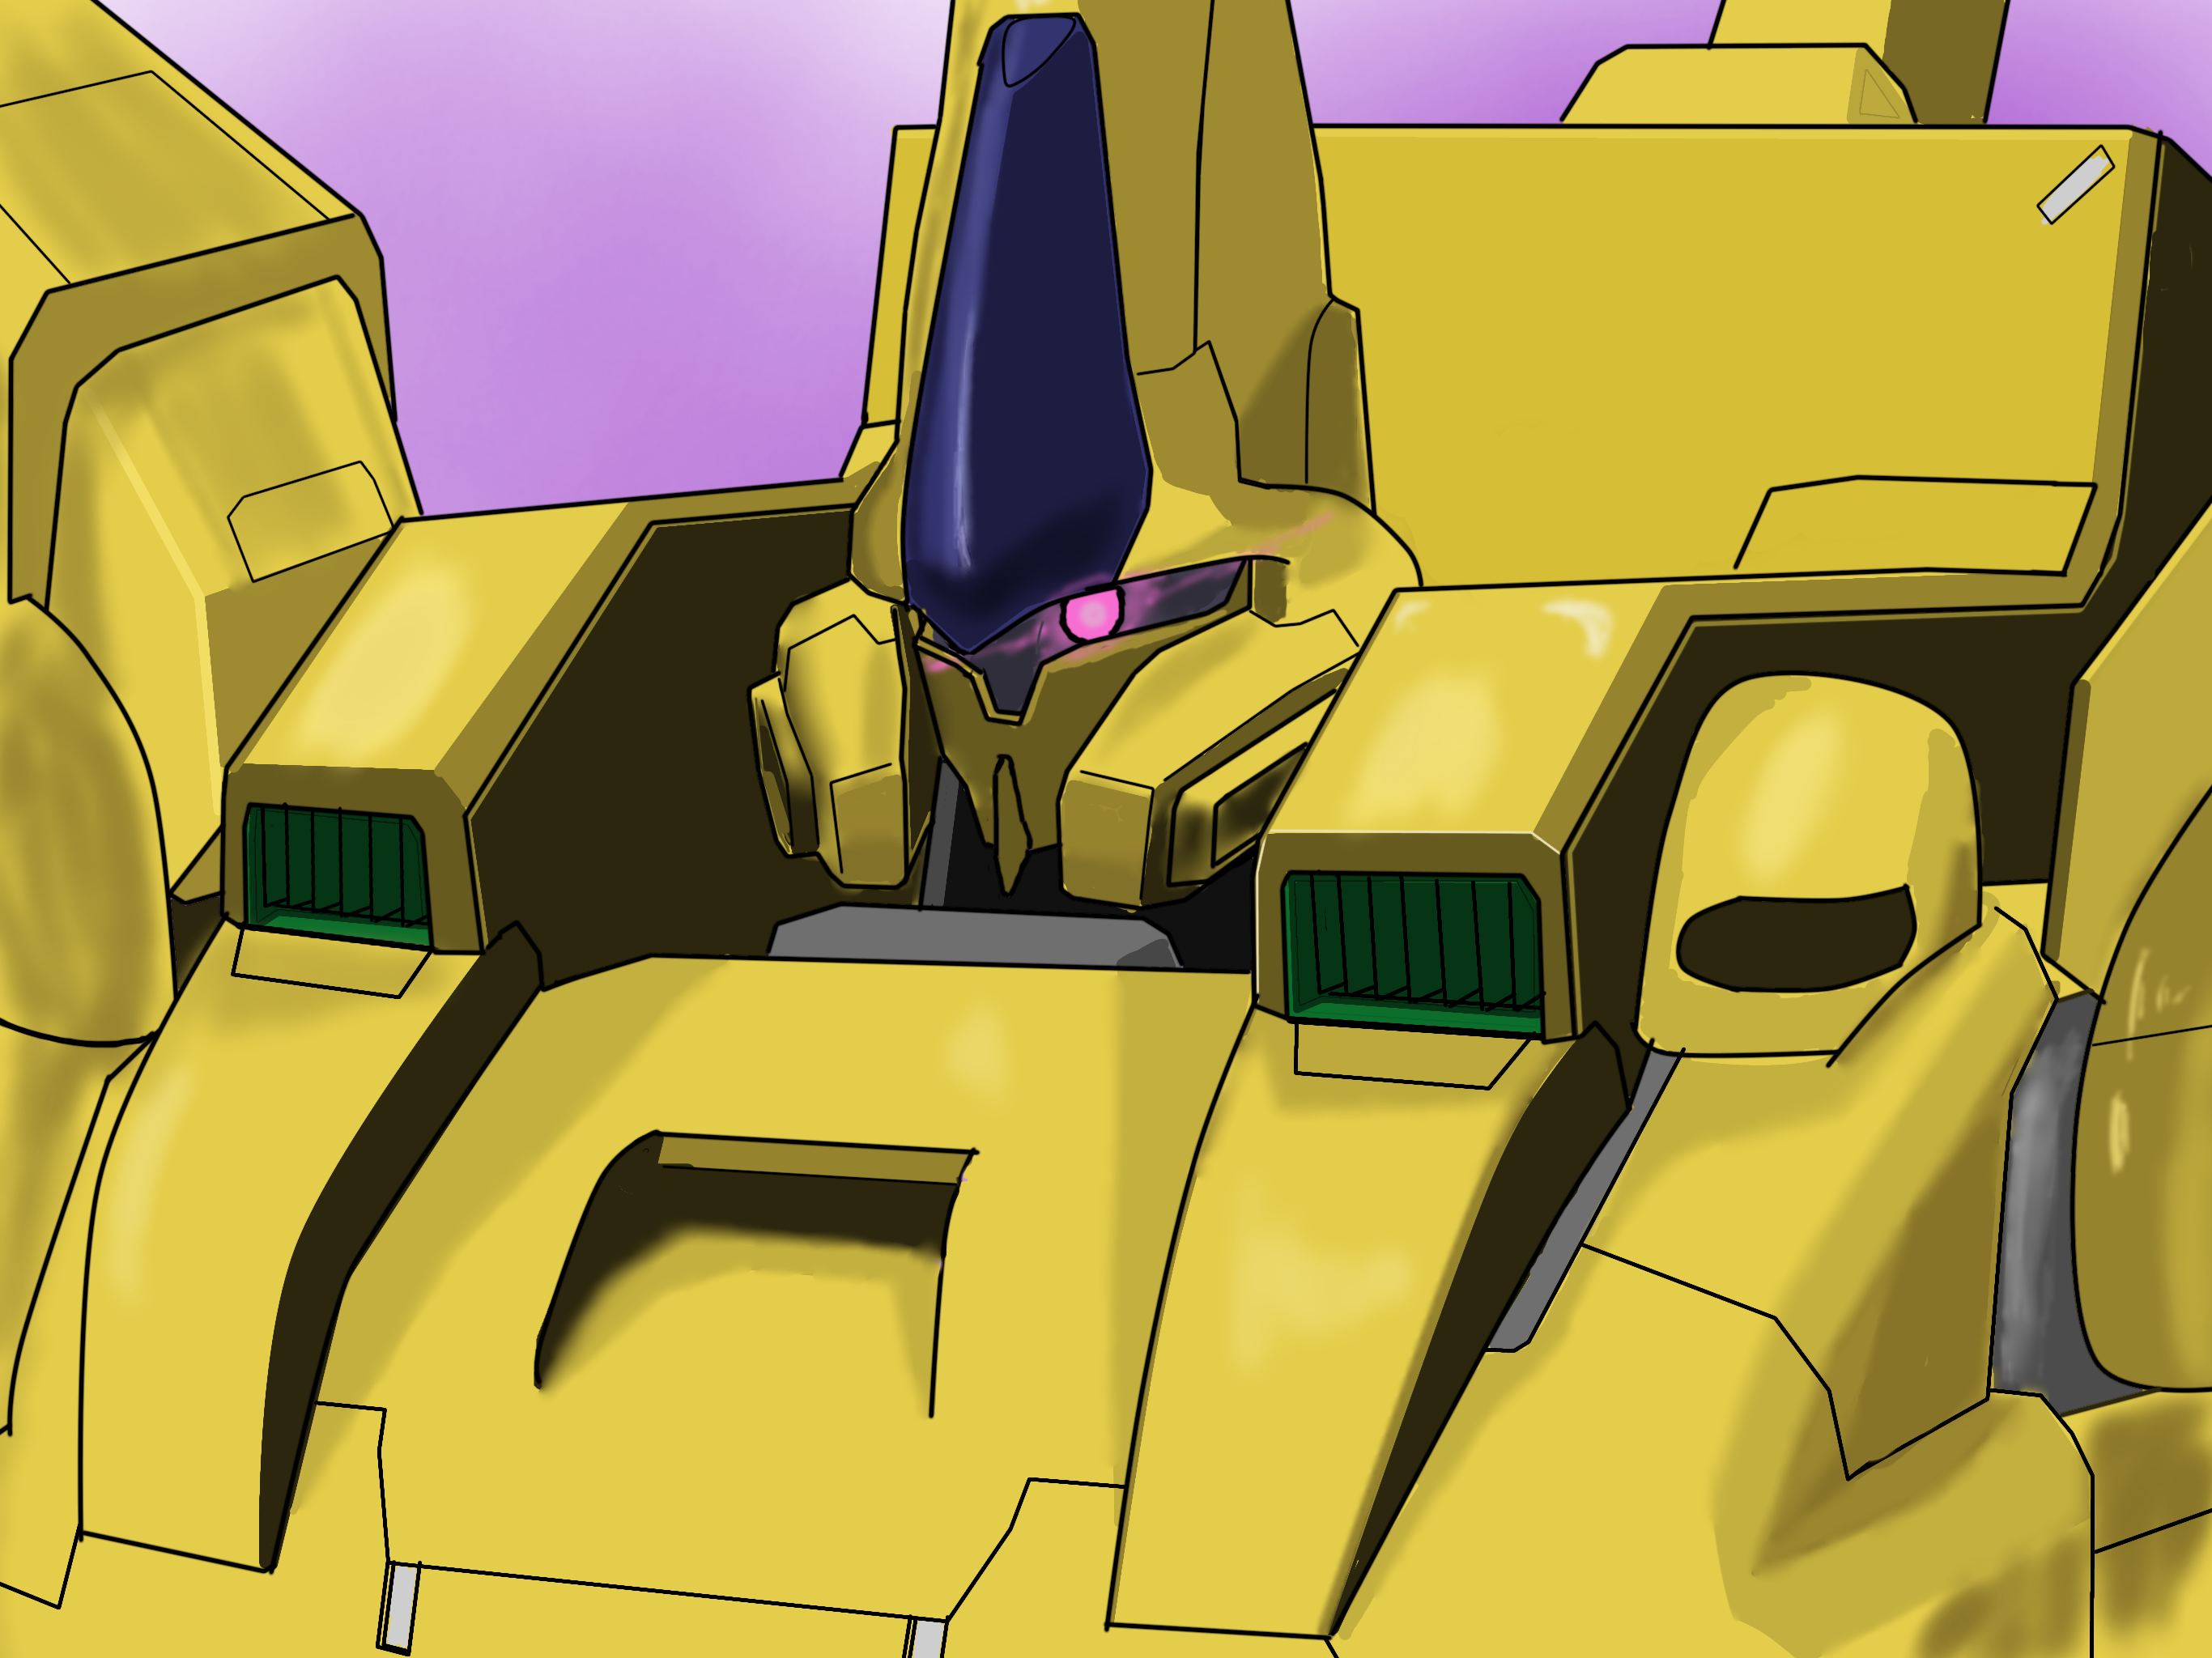 The O Mobile Suit Zeta Gundam Mobile Suit Anime Mechs Super Robot Taisen Artwork Digital Art Fan Art 2732x2048